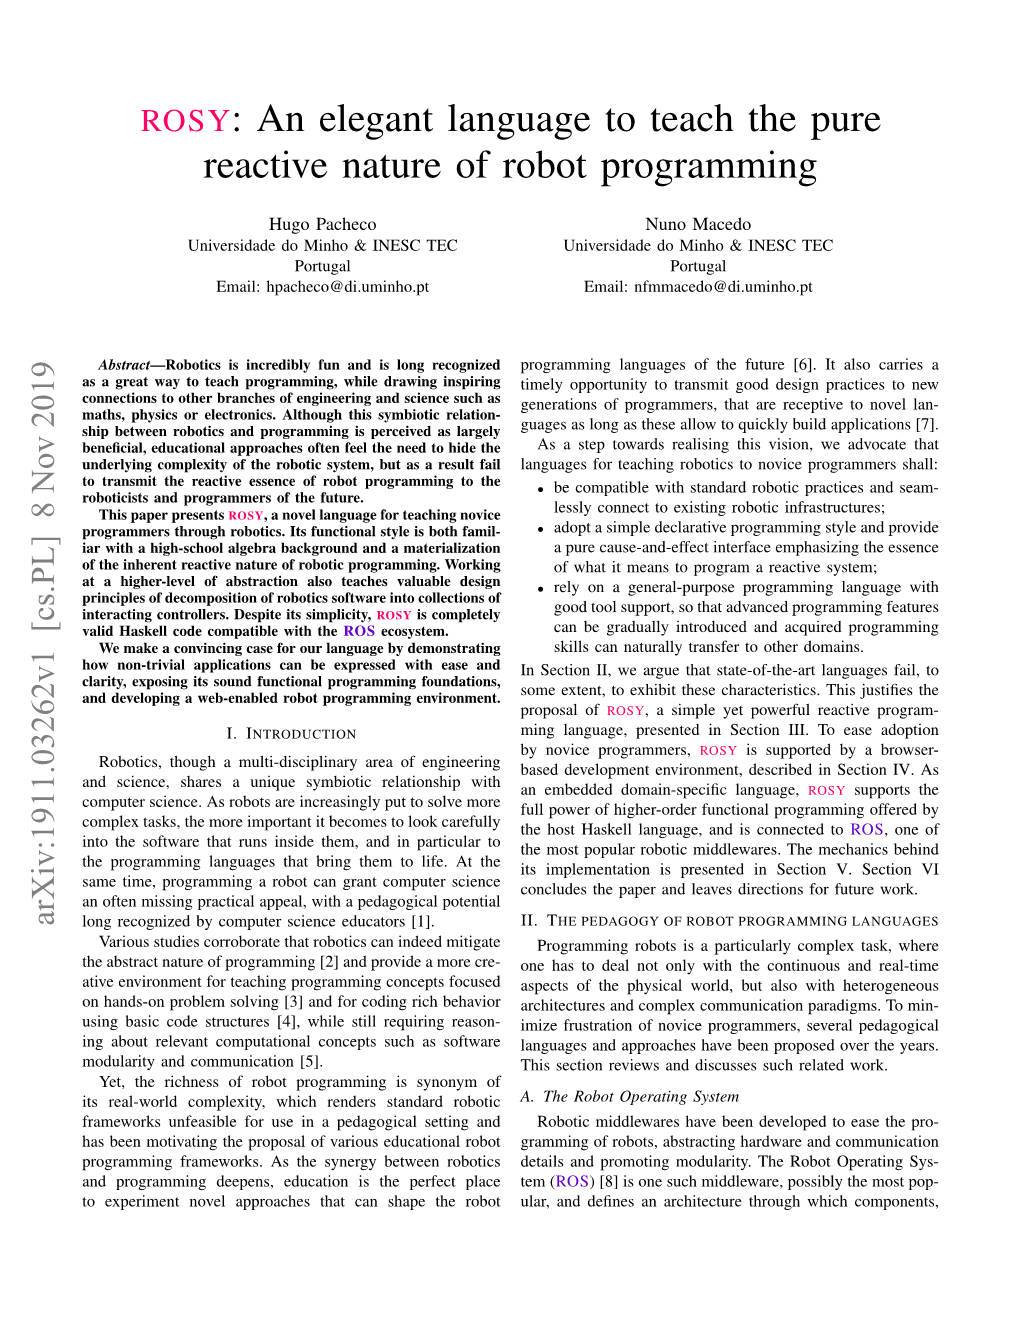 Reactive Nature of Robot Programming